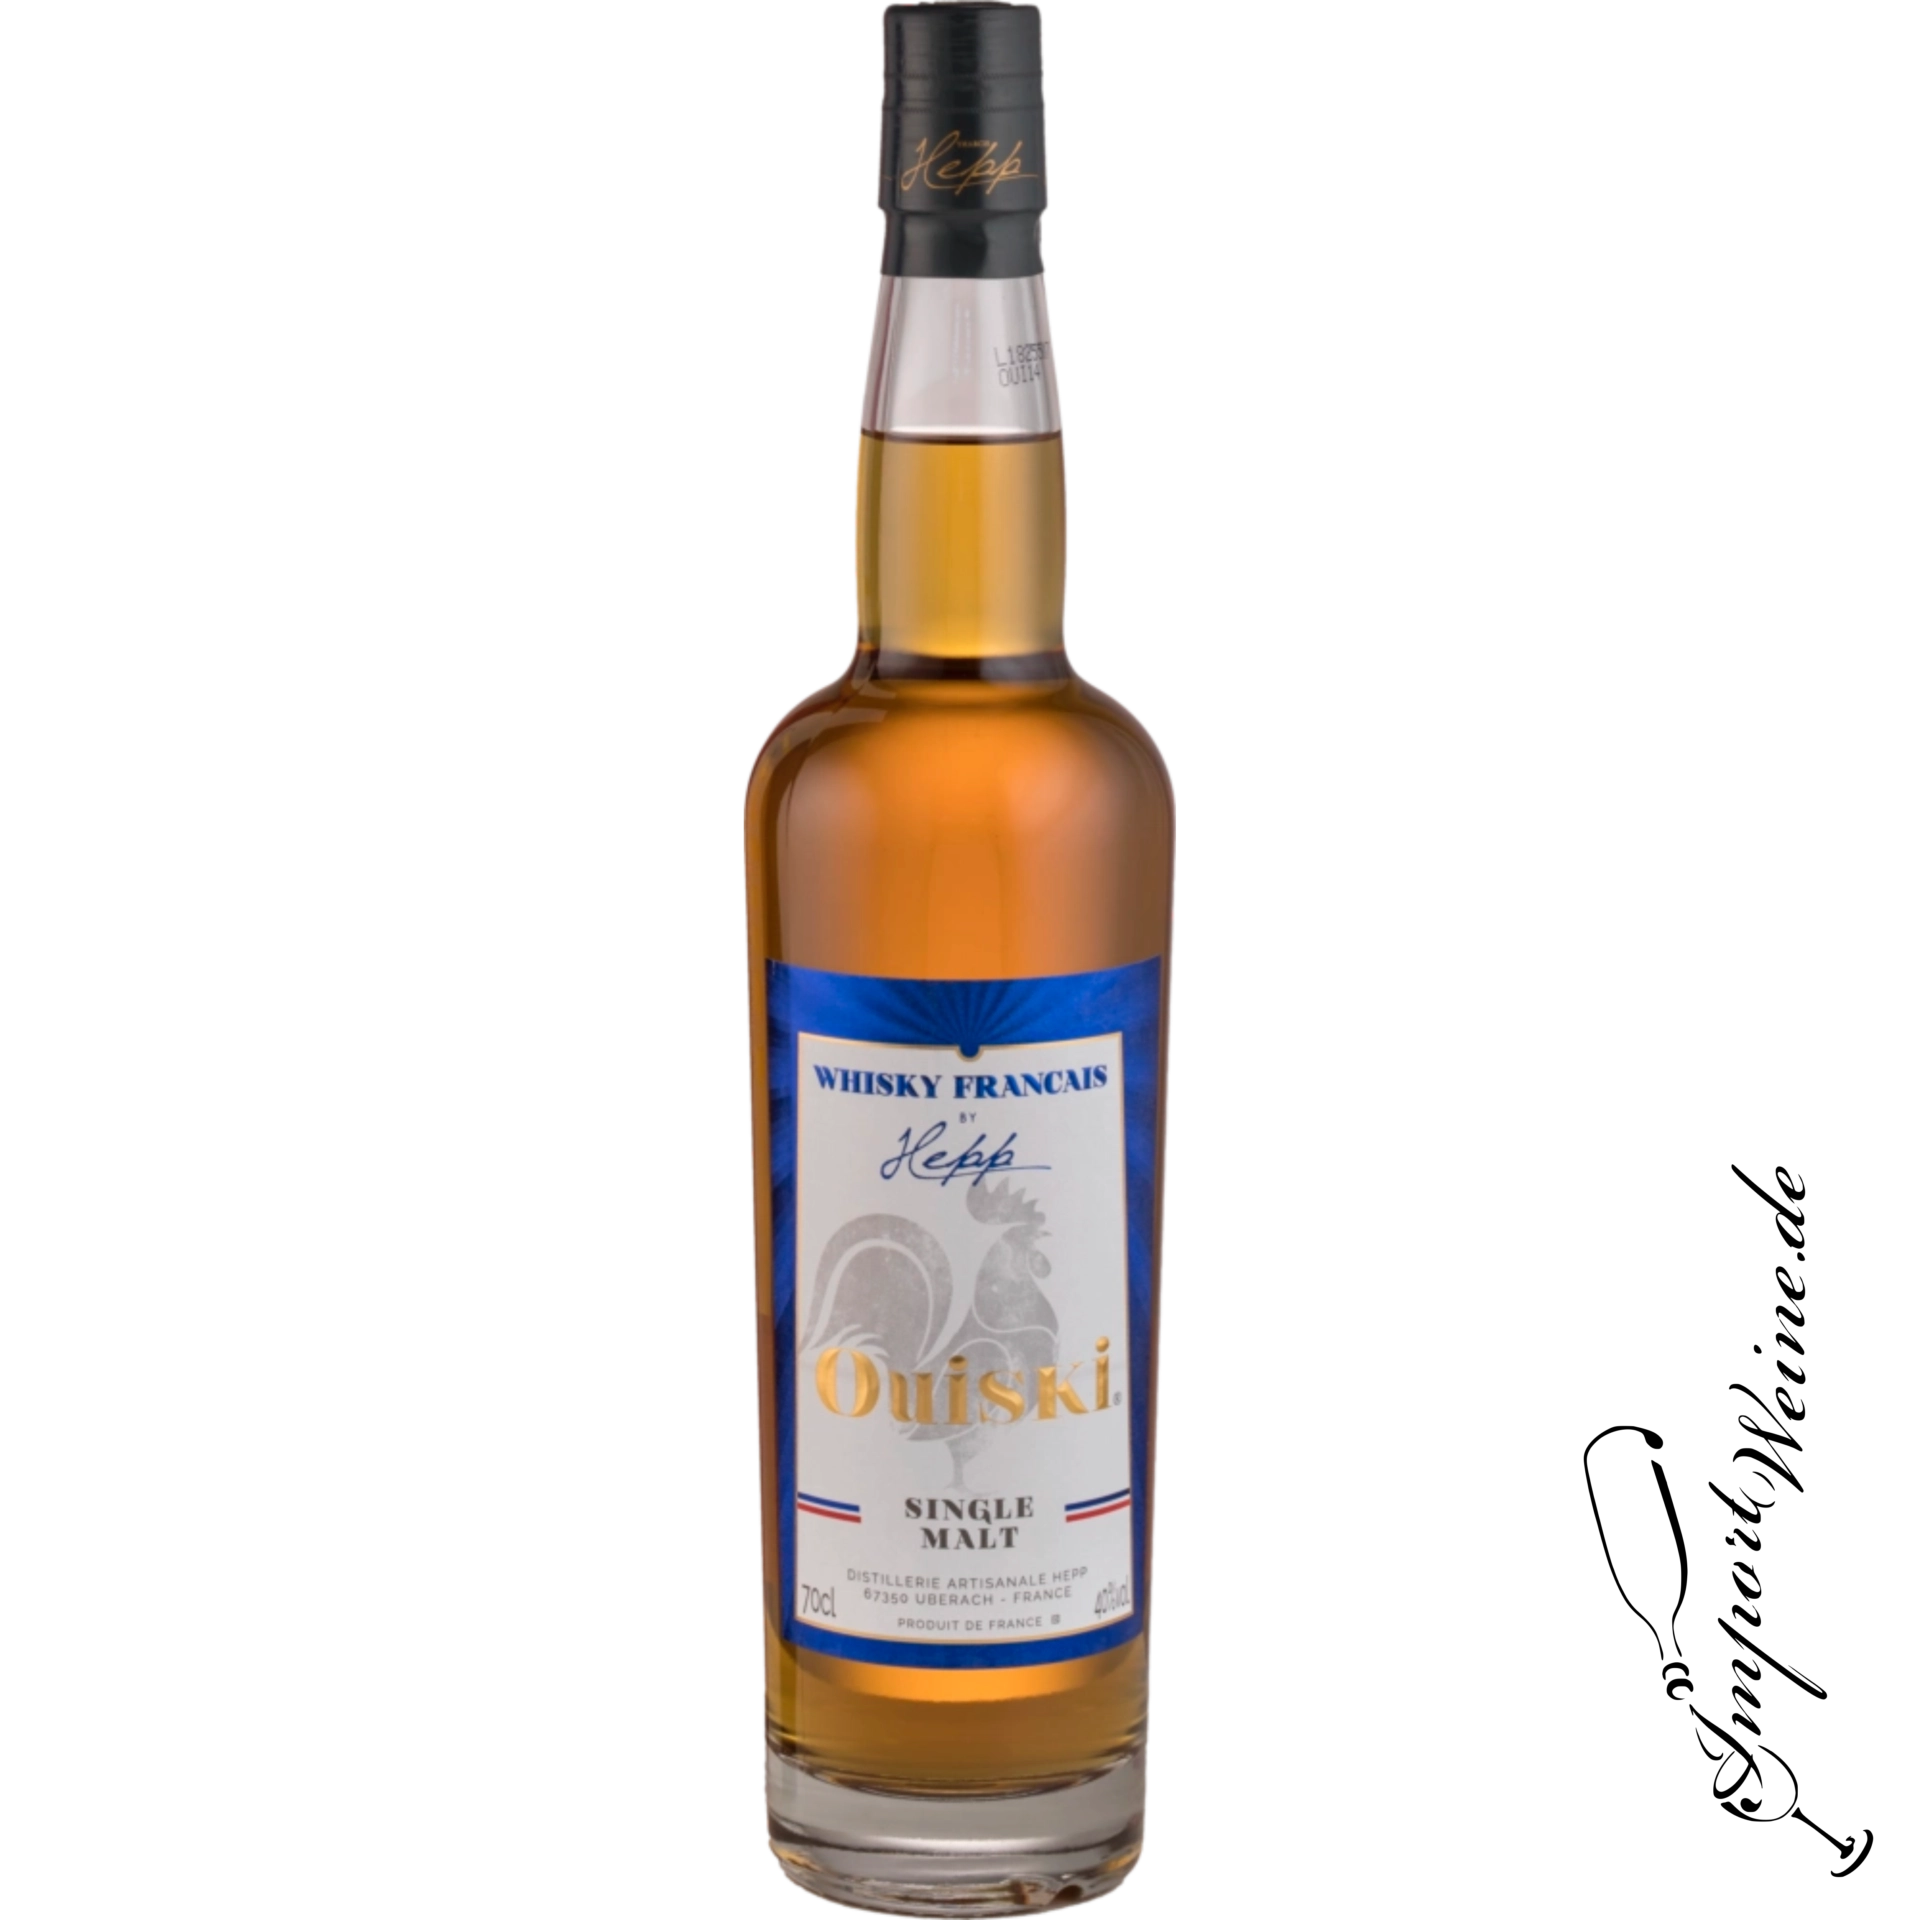 Distillerie Hepp Ouiski Single Malt Whisky Francais